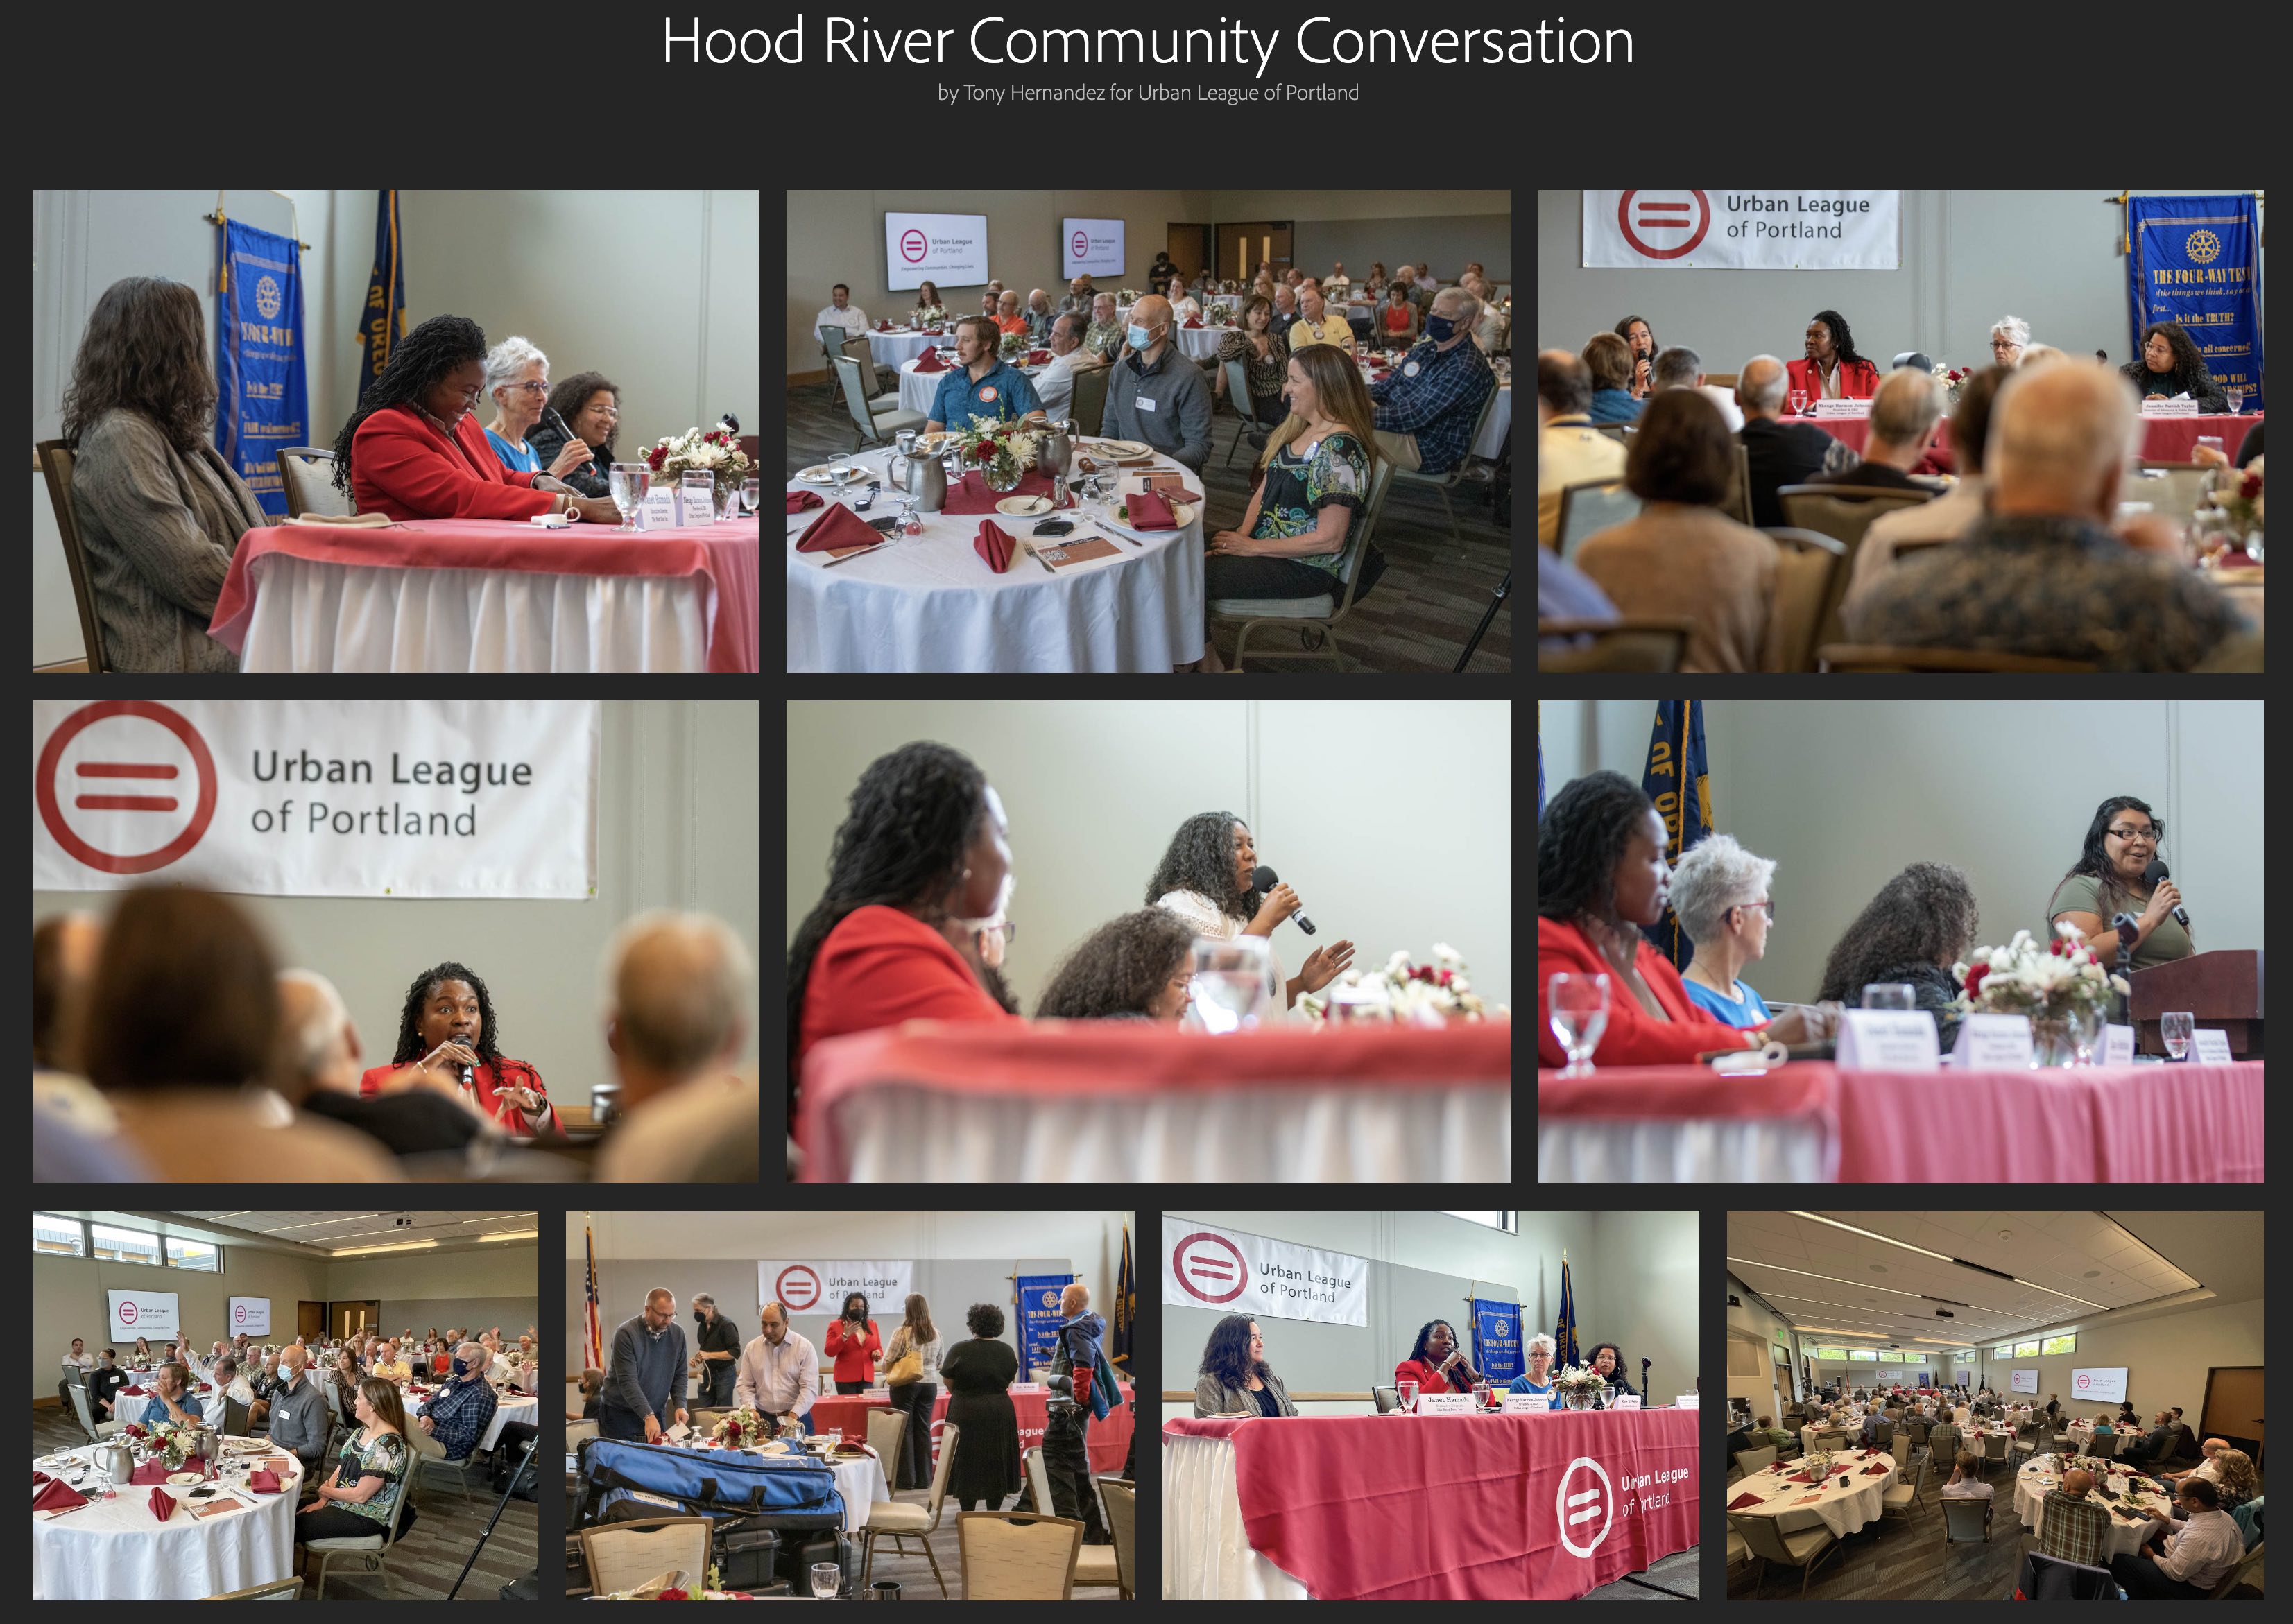 Thumbnail of Hood River Community Conversation event